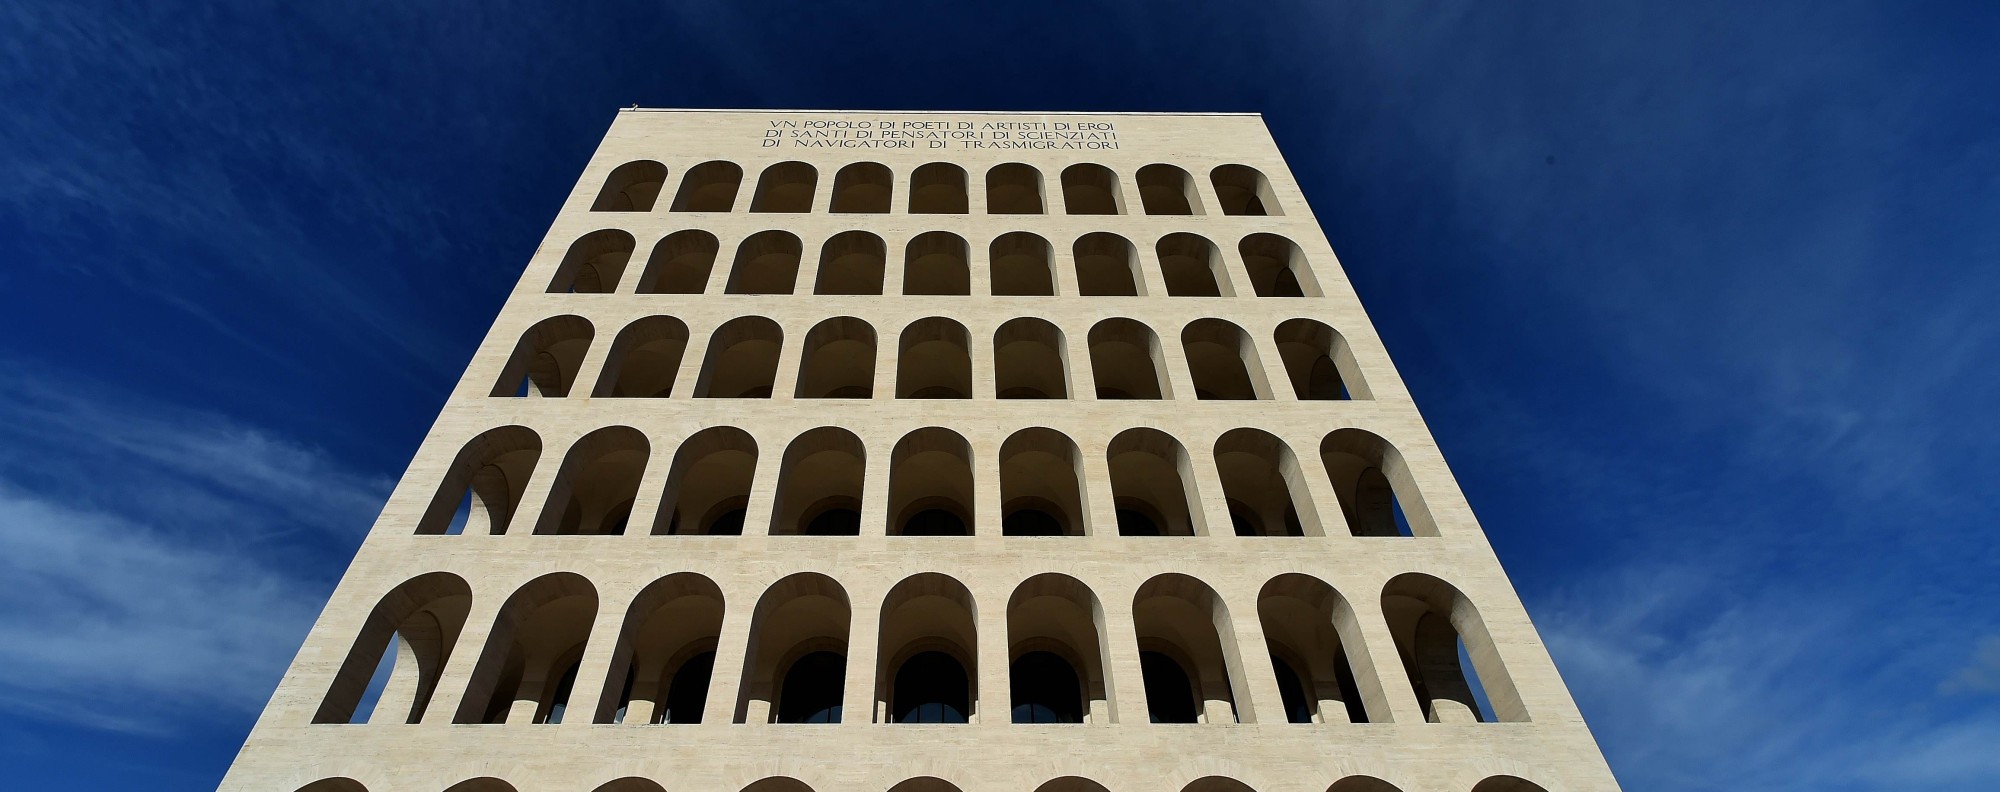 Fendi moves headquarters into Mussolini-comissioned building